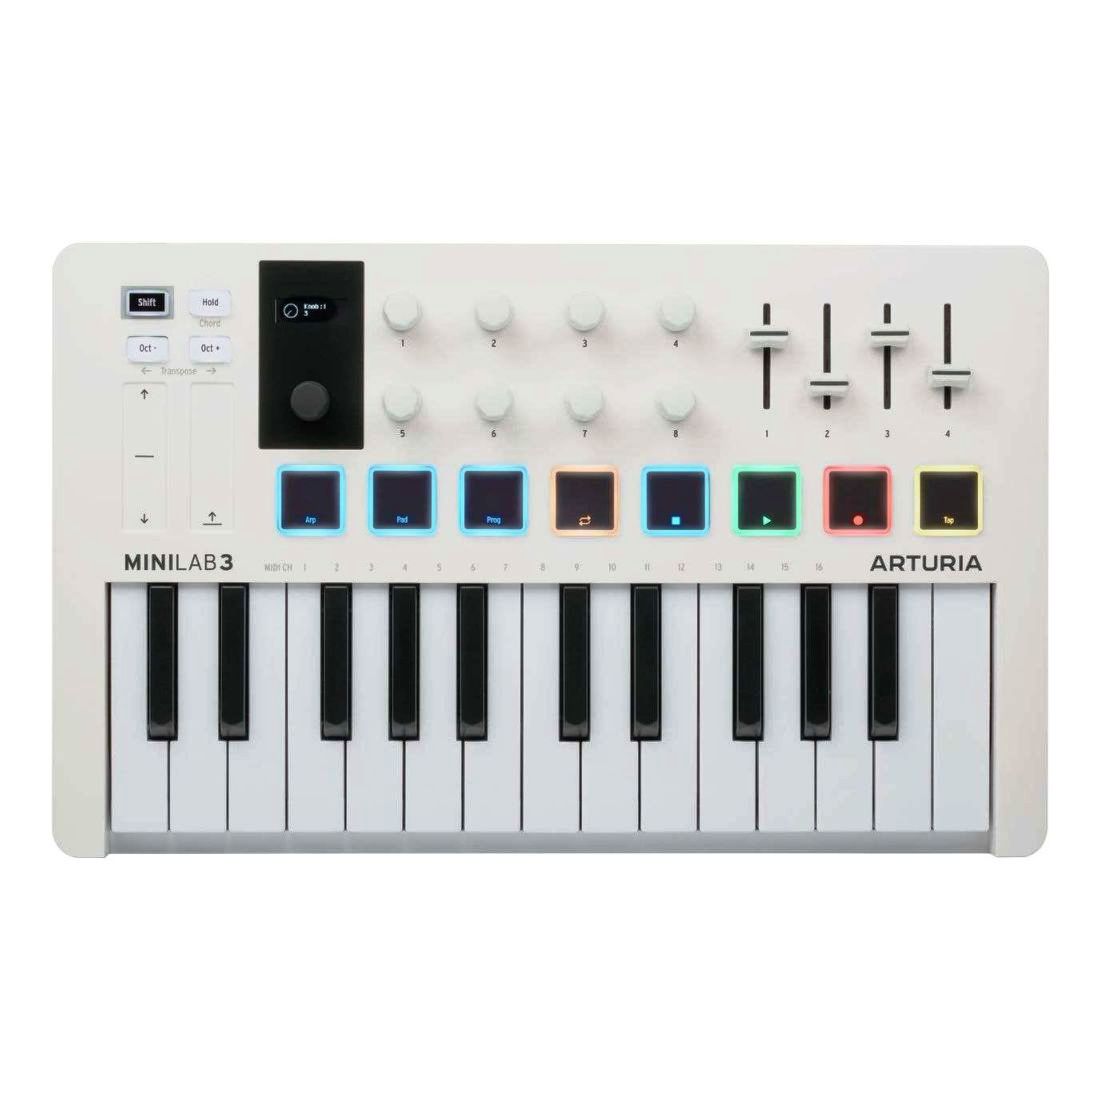 Контроллер Arturia MiniLab 3 для создания музыки универсальный, белый миди контроллер arturia beatstep pro